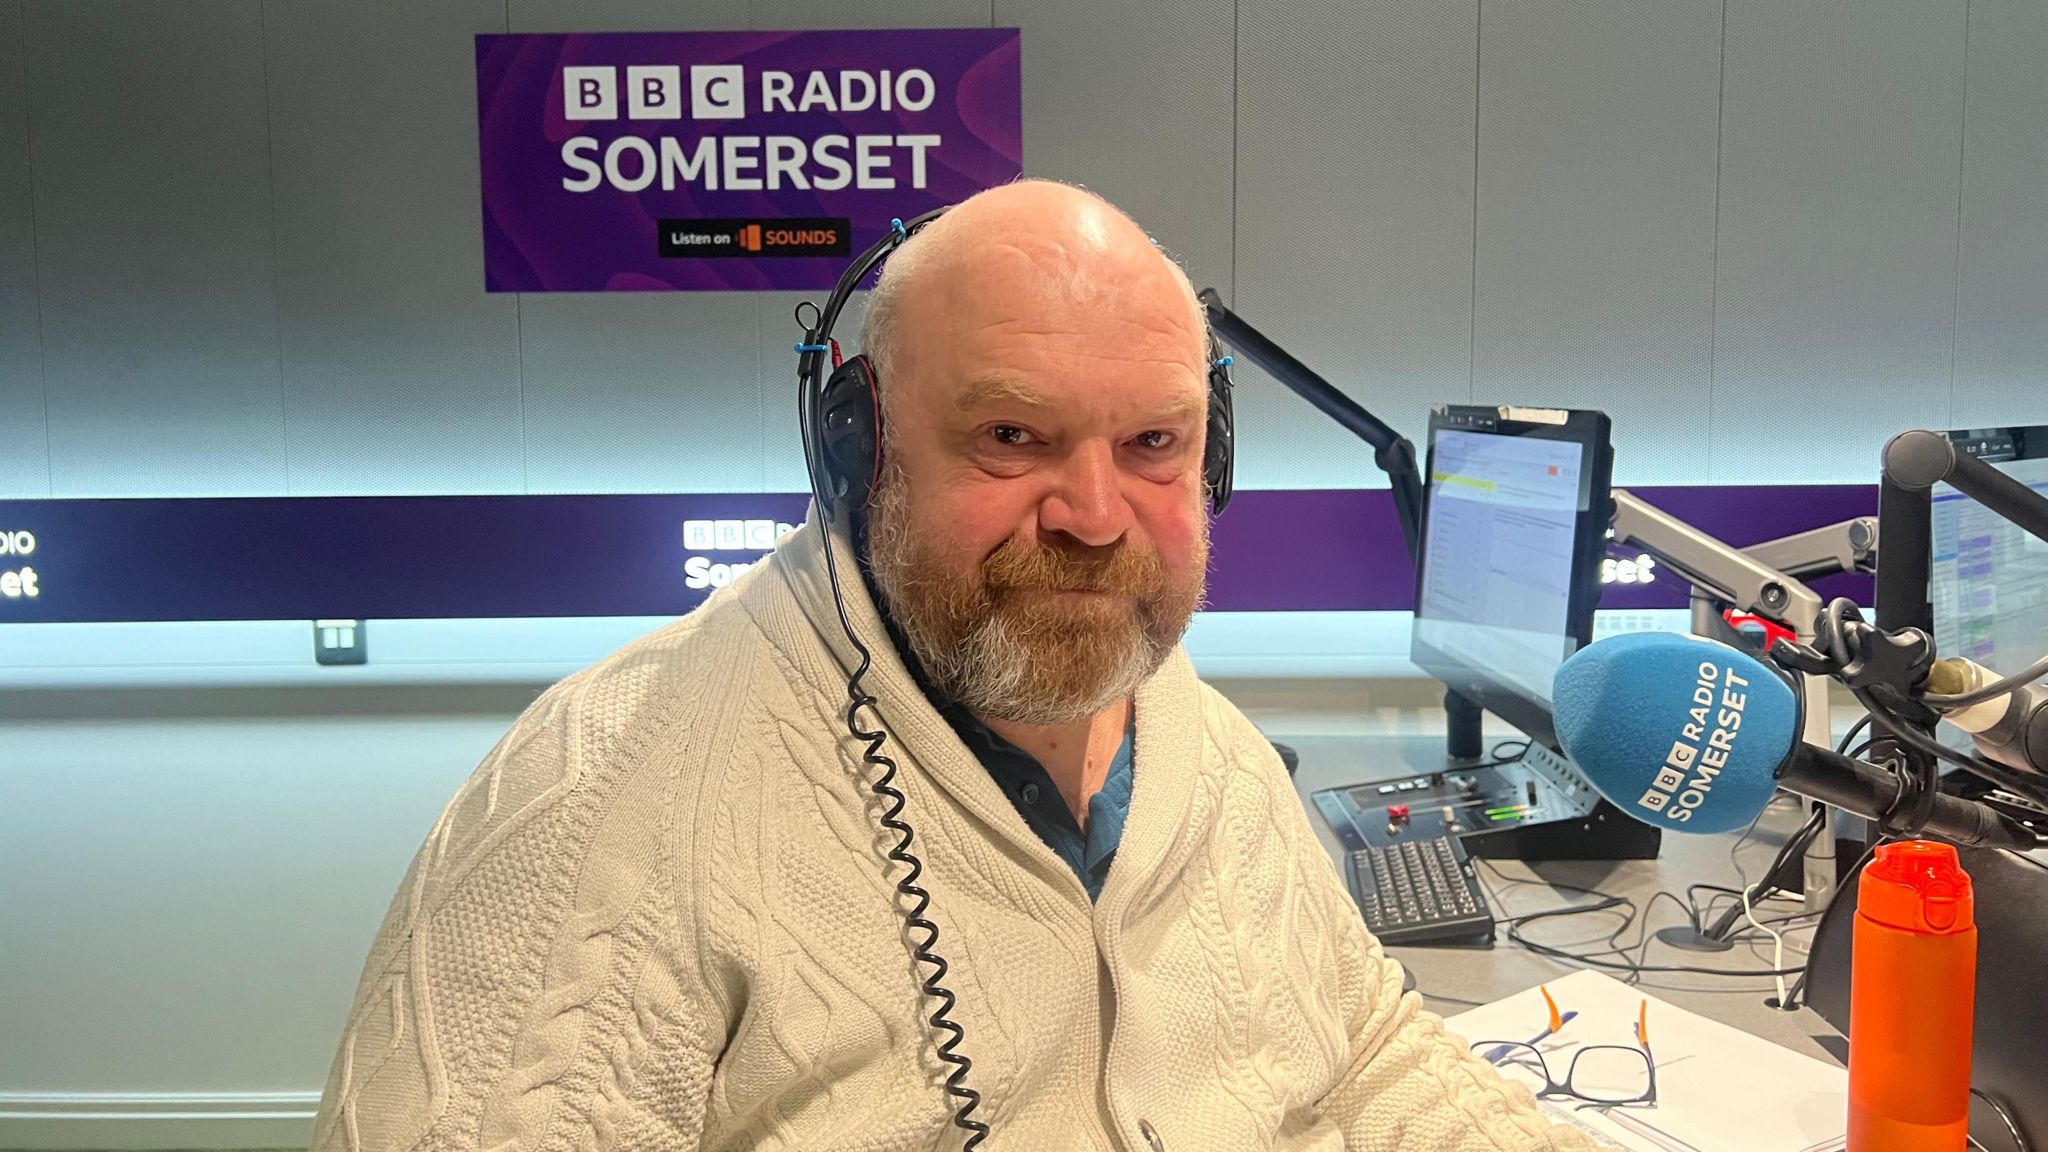 Somerset Council leader Cllr Bill Revans in the BBC Radio Somerset studio